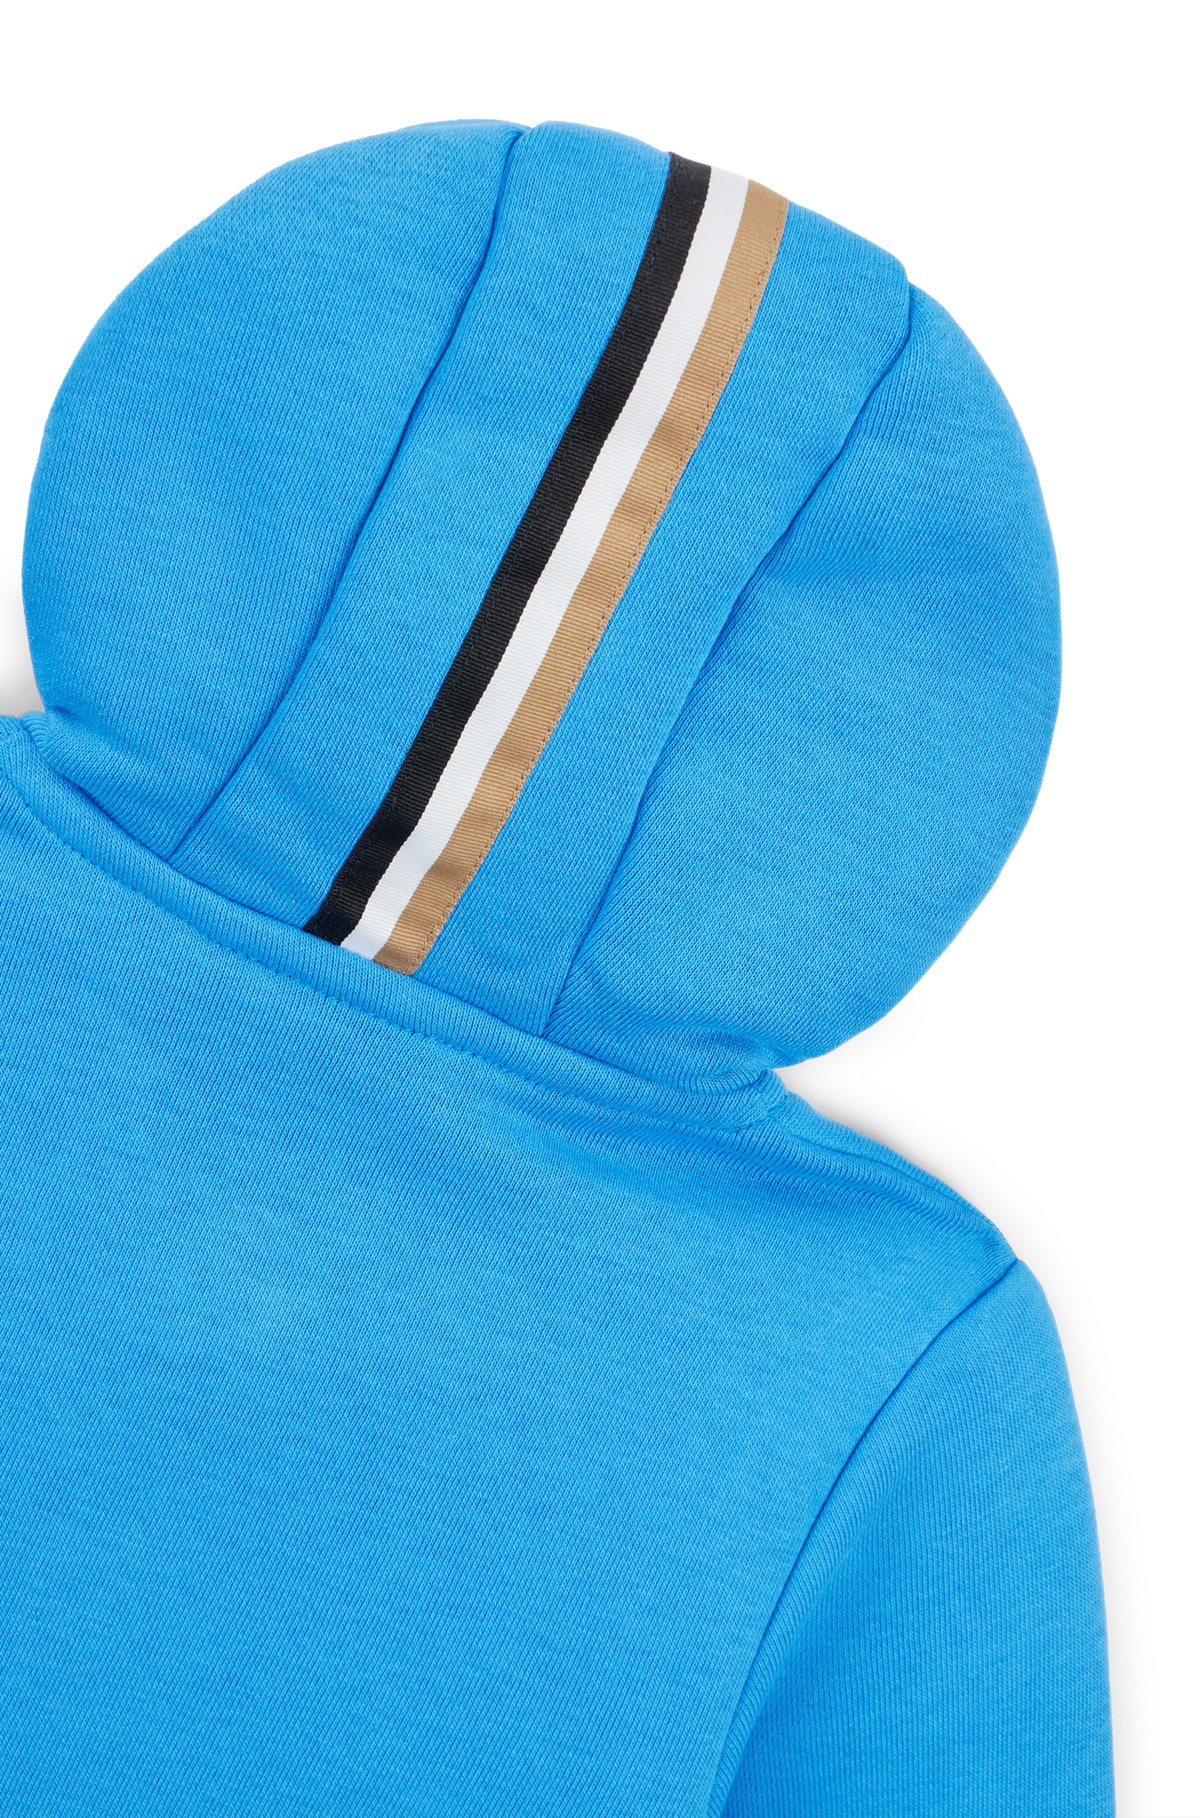 Kids' hoodie in cotton-blend fleece with vertical logo, Blue